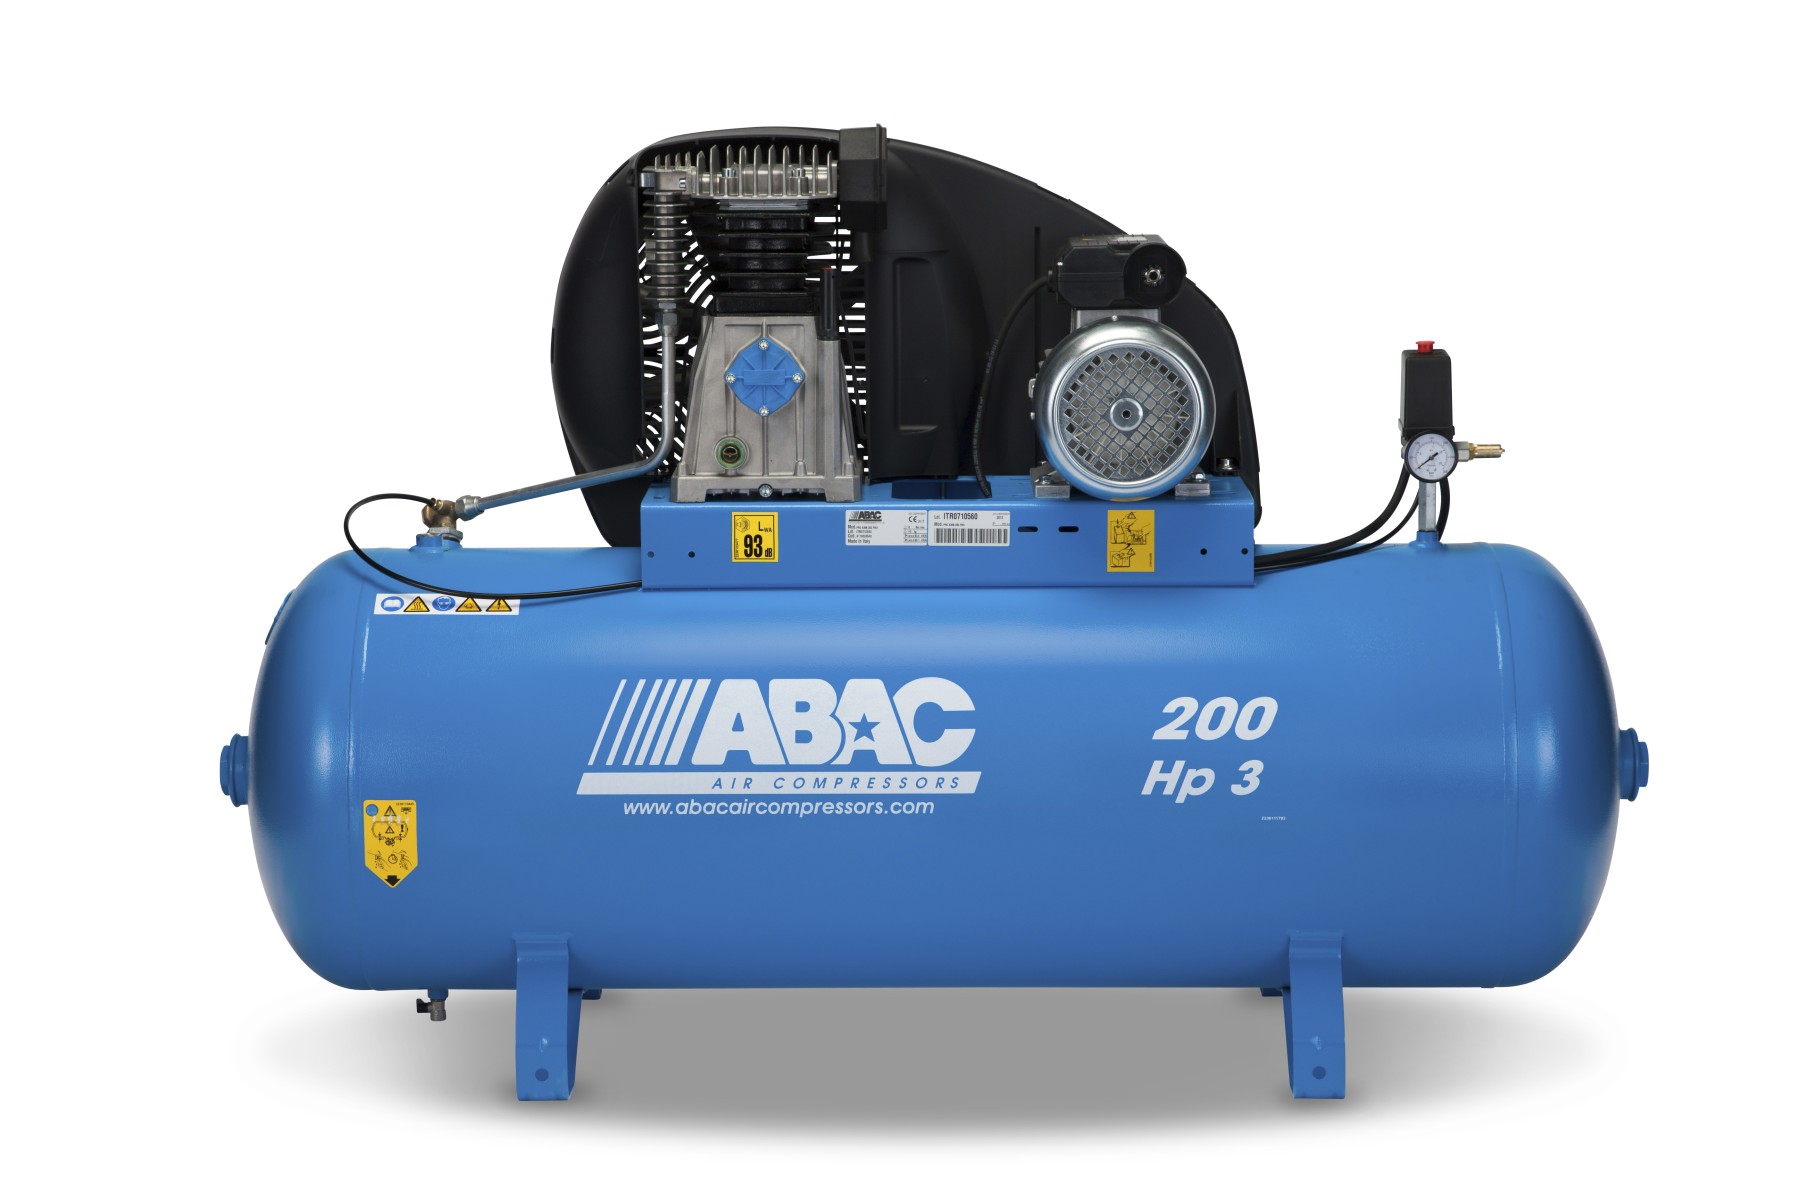 Compresor monofásico ABAC A29B-200 FT3